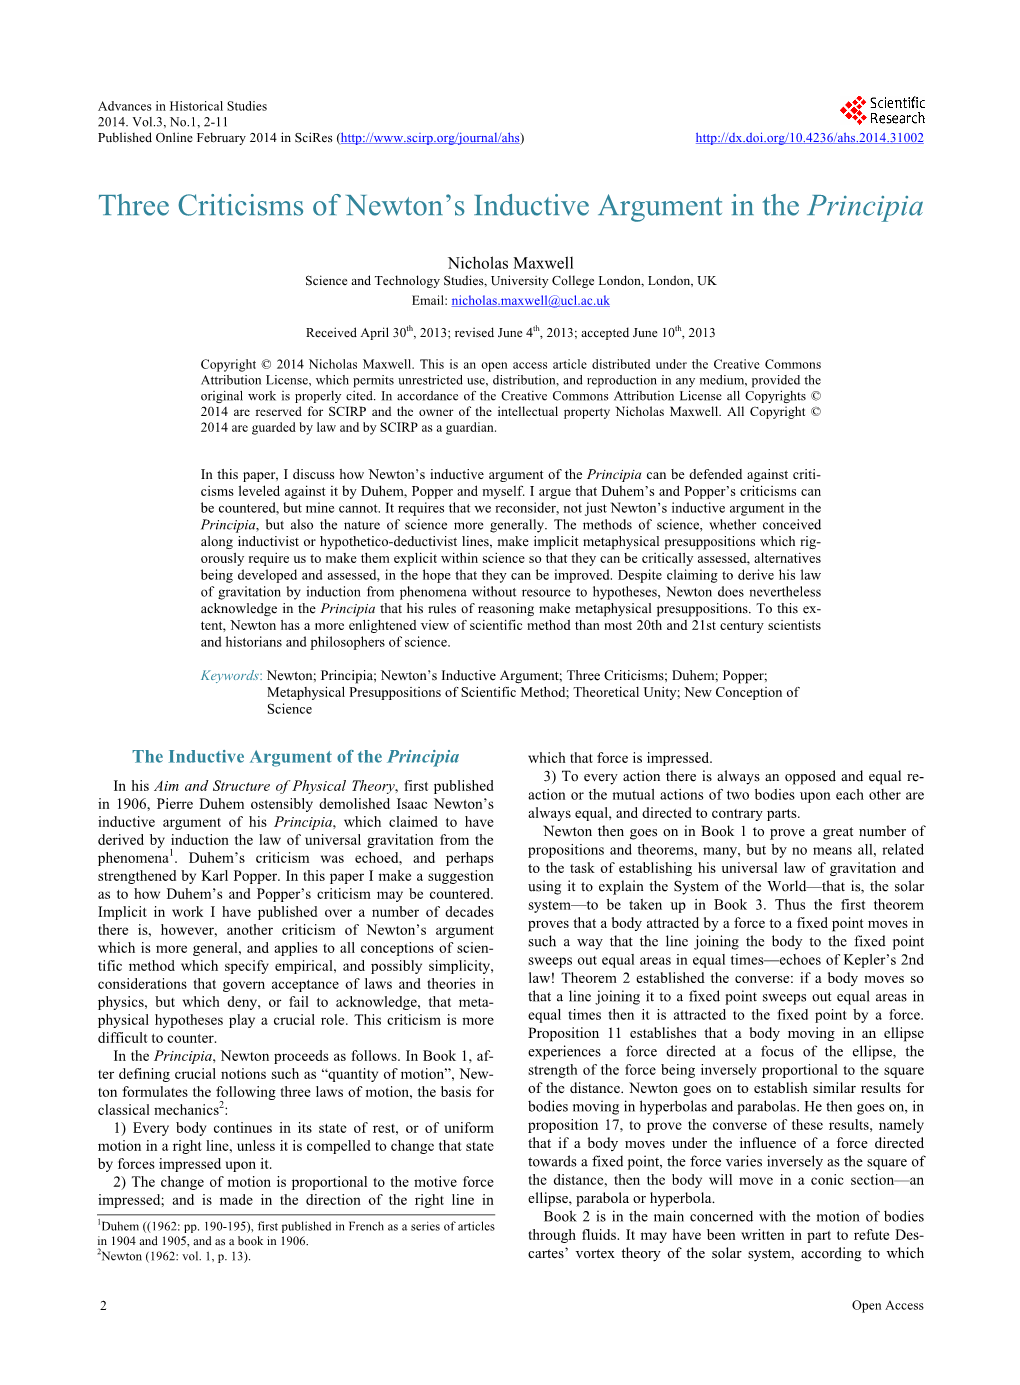 Three Criticisms of Newton's Inductive Argument in the Principia